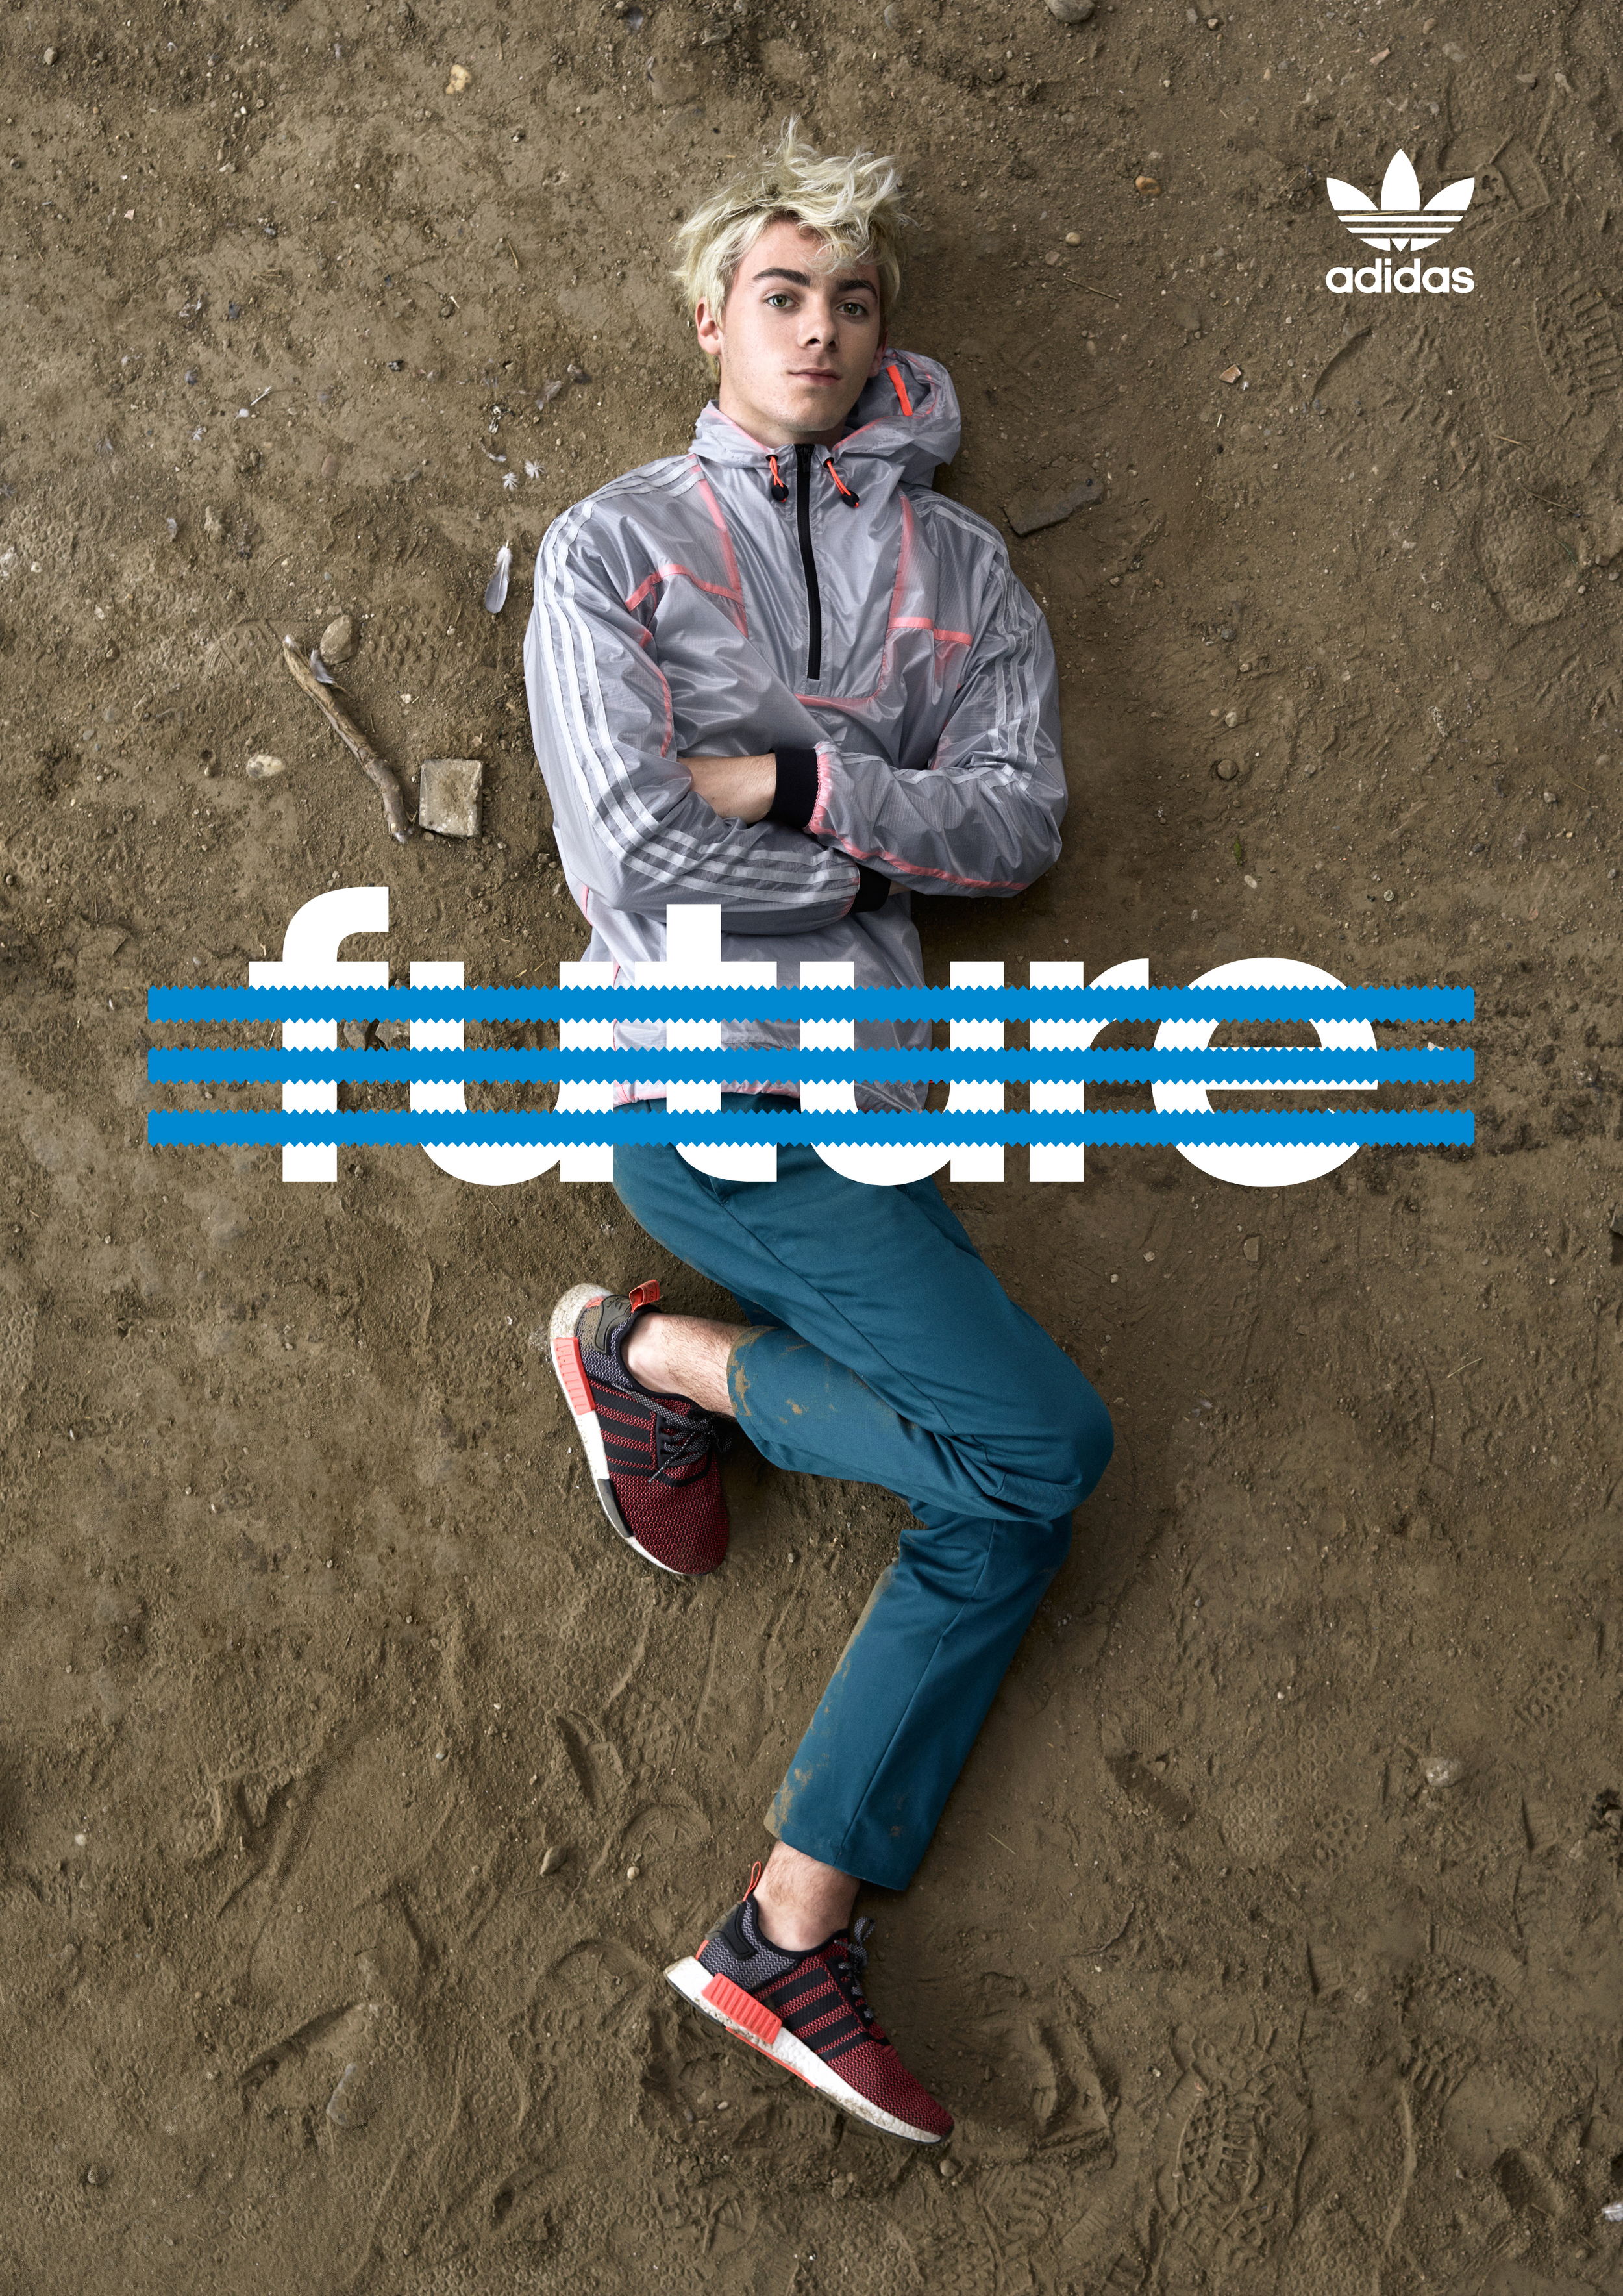 Adidas Originals - Future — Matthew Edwards